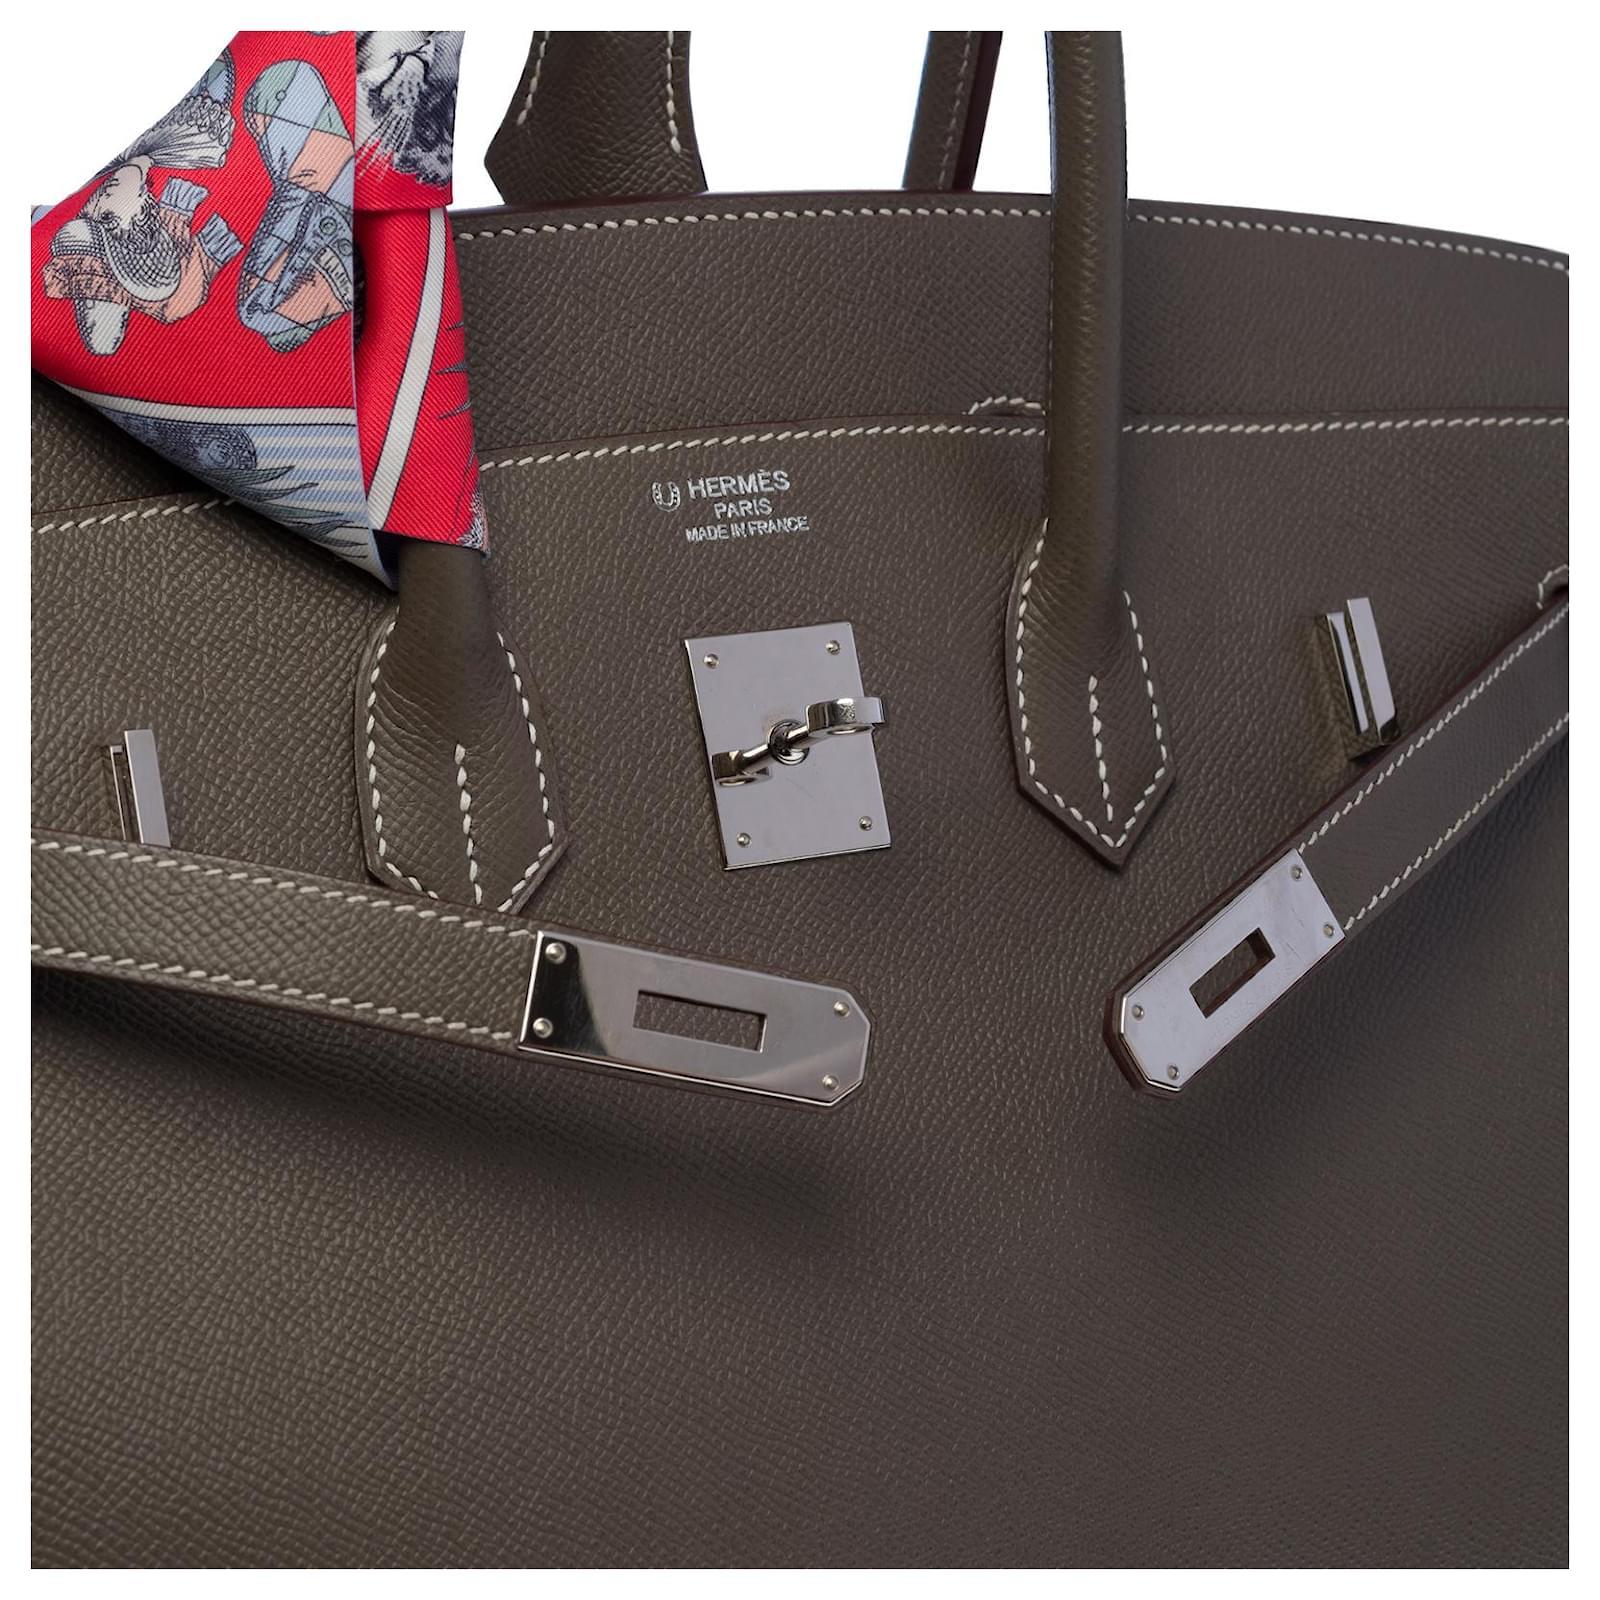 Hermès Horseshoe Stamped (HSS) Bi-color Jaune D'Or and Sanguine Birkin 35cm  of Epsom Leather with Palladium Hardware, Handbags and Accessories Online, 2019